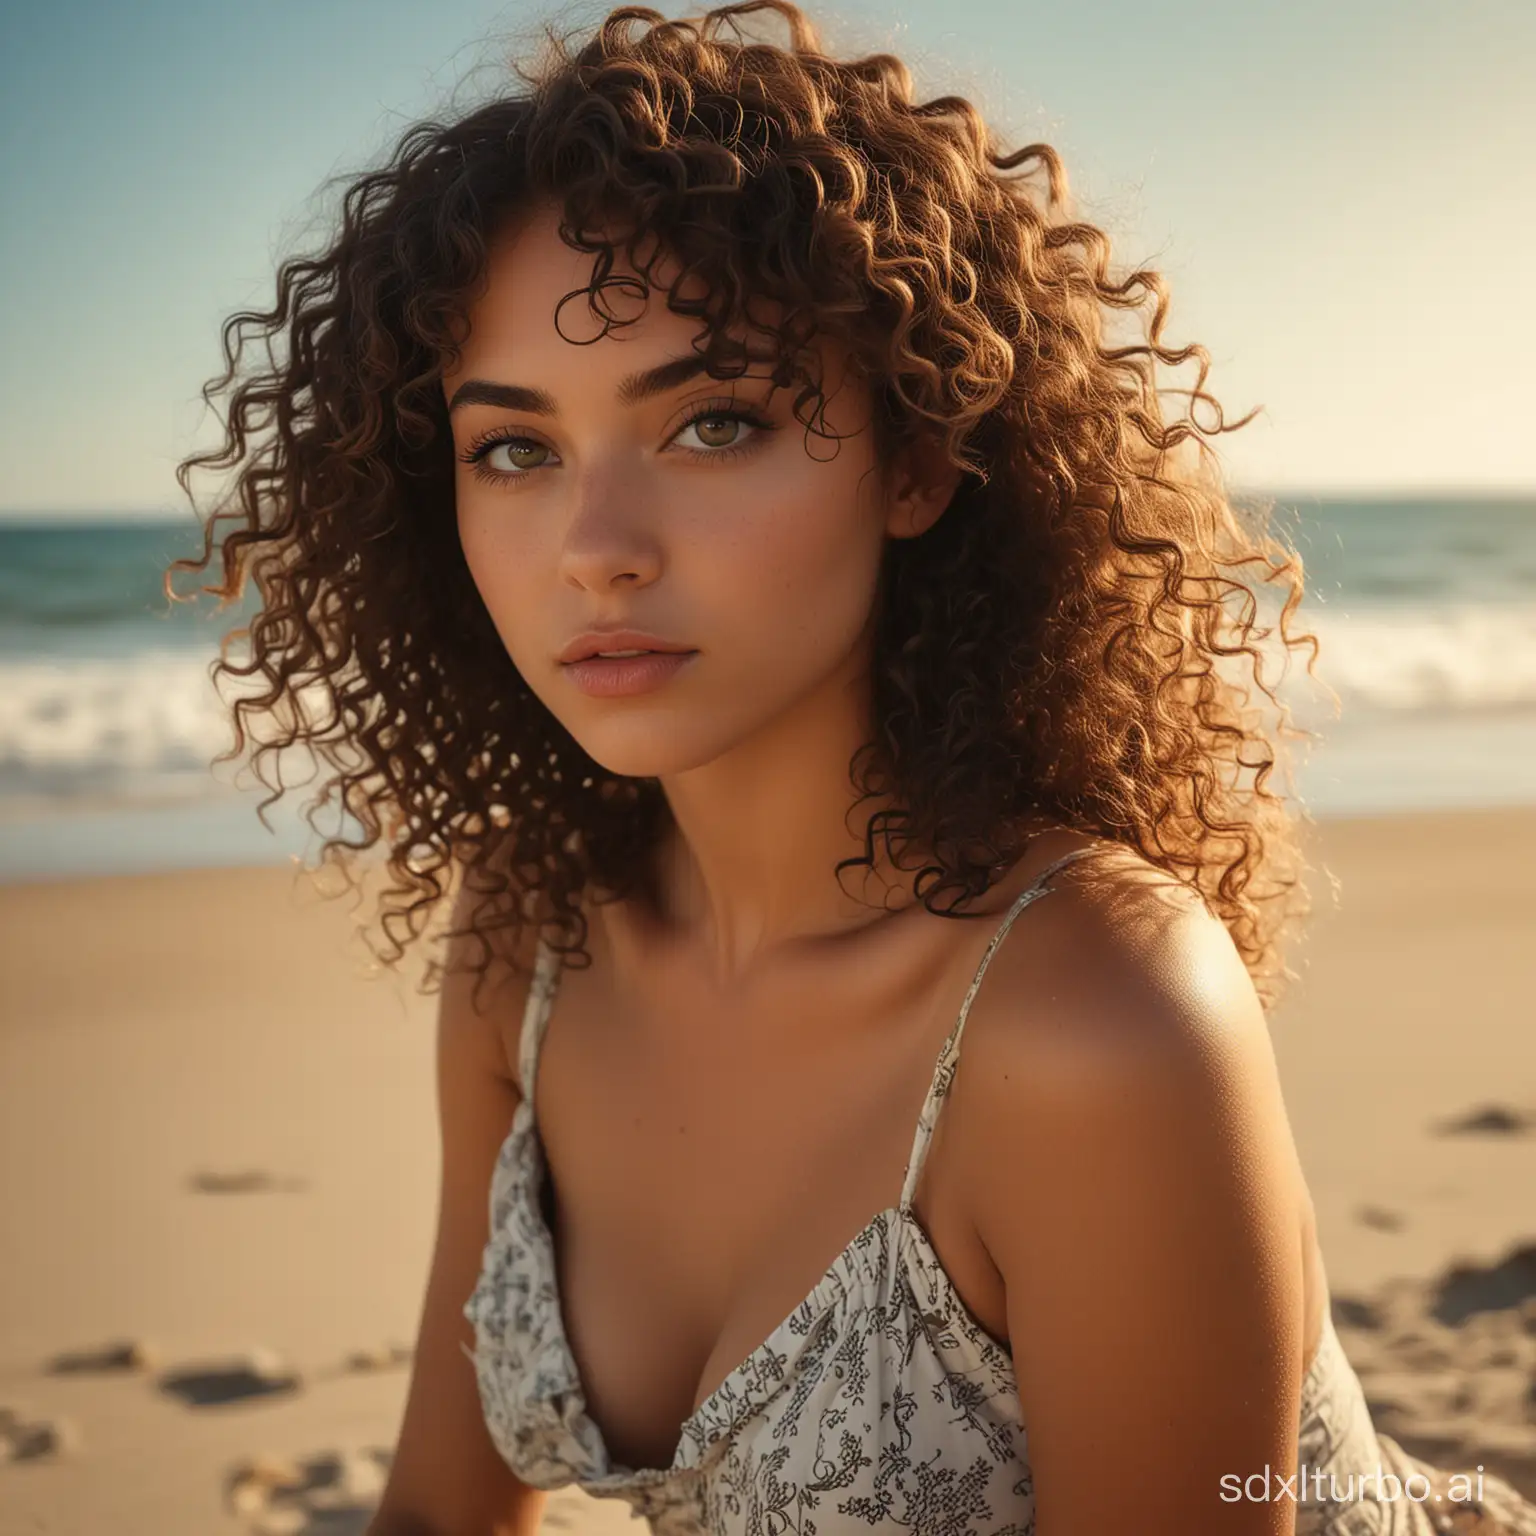 Attractive-Mixed-Woman-in-Sundress-Enjoying-Beach-Serenity